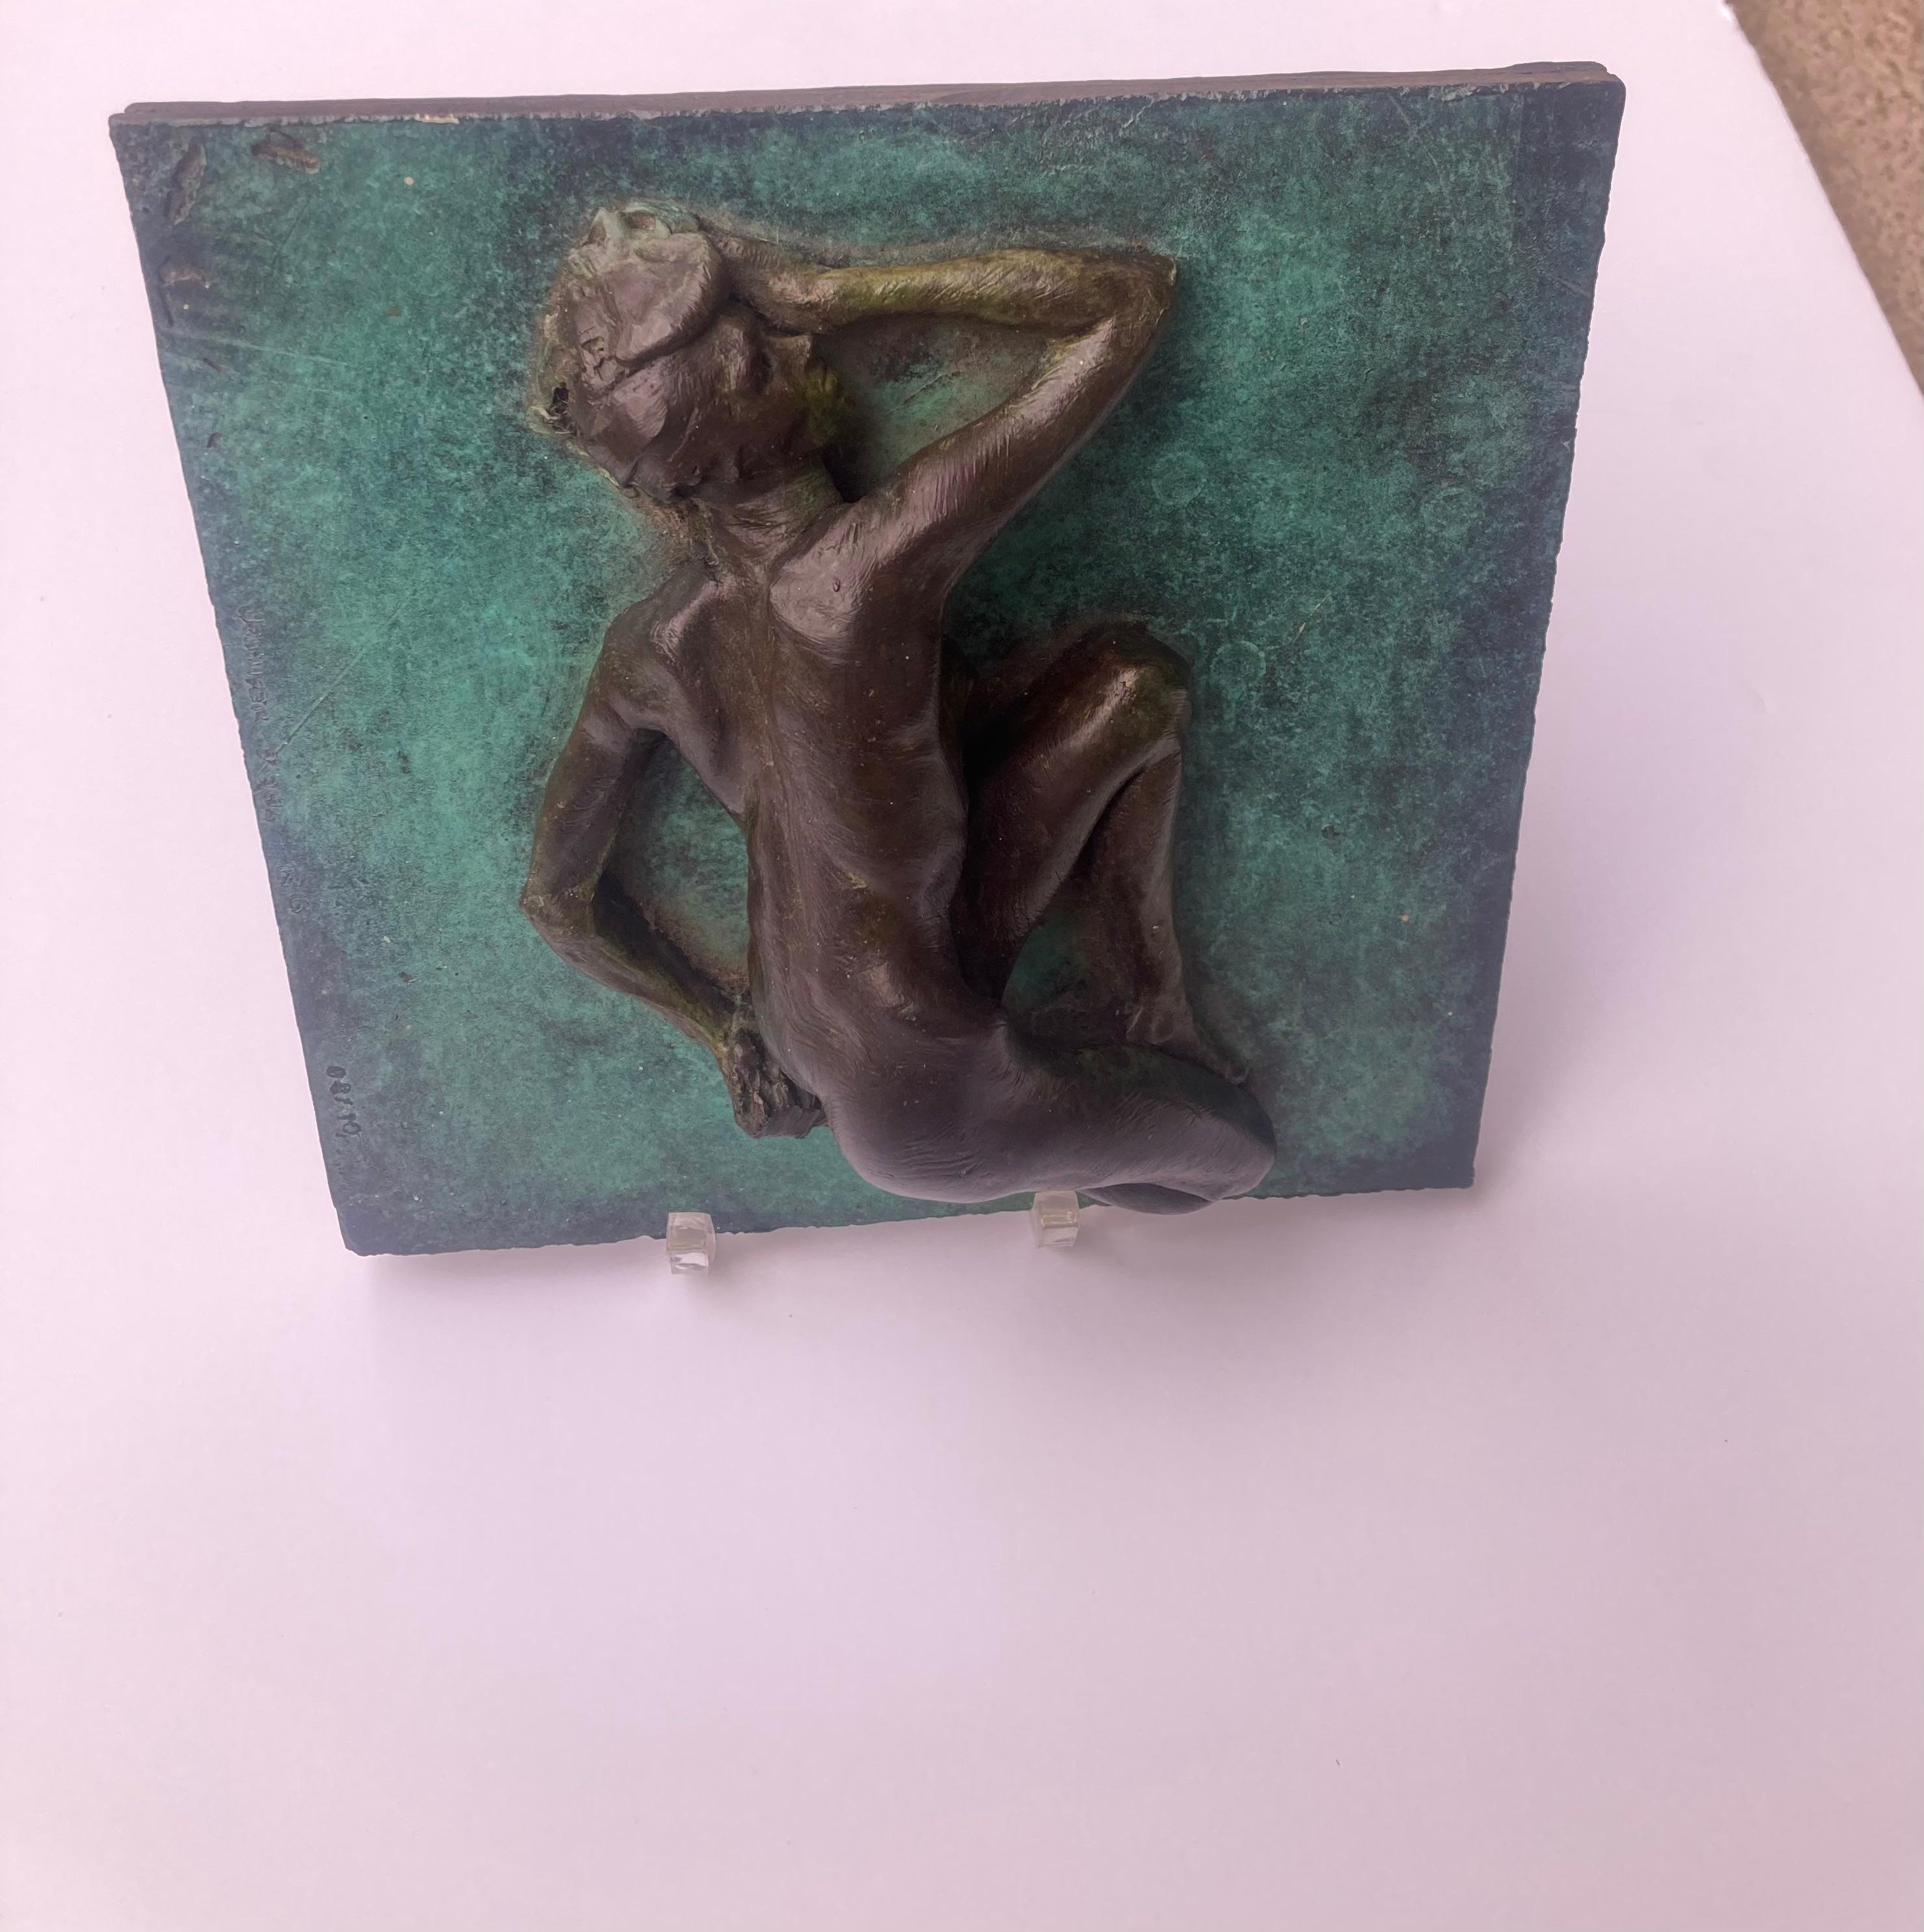 Américain Sculpture de nu en bronze de Robert Graham, / mur/table TitreJennifer4/10,1996.RG en vente